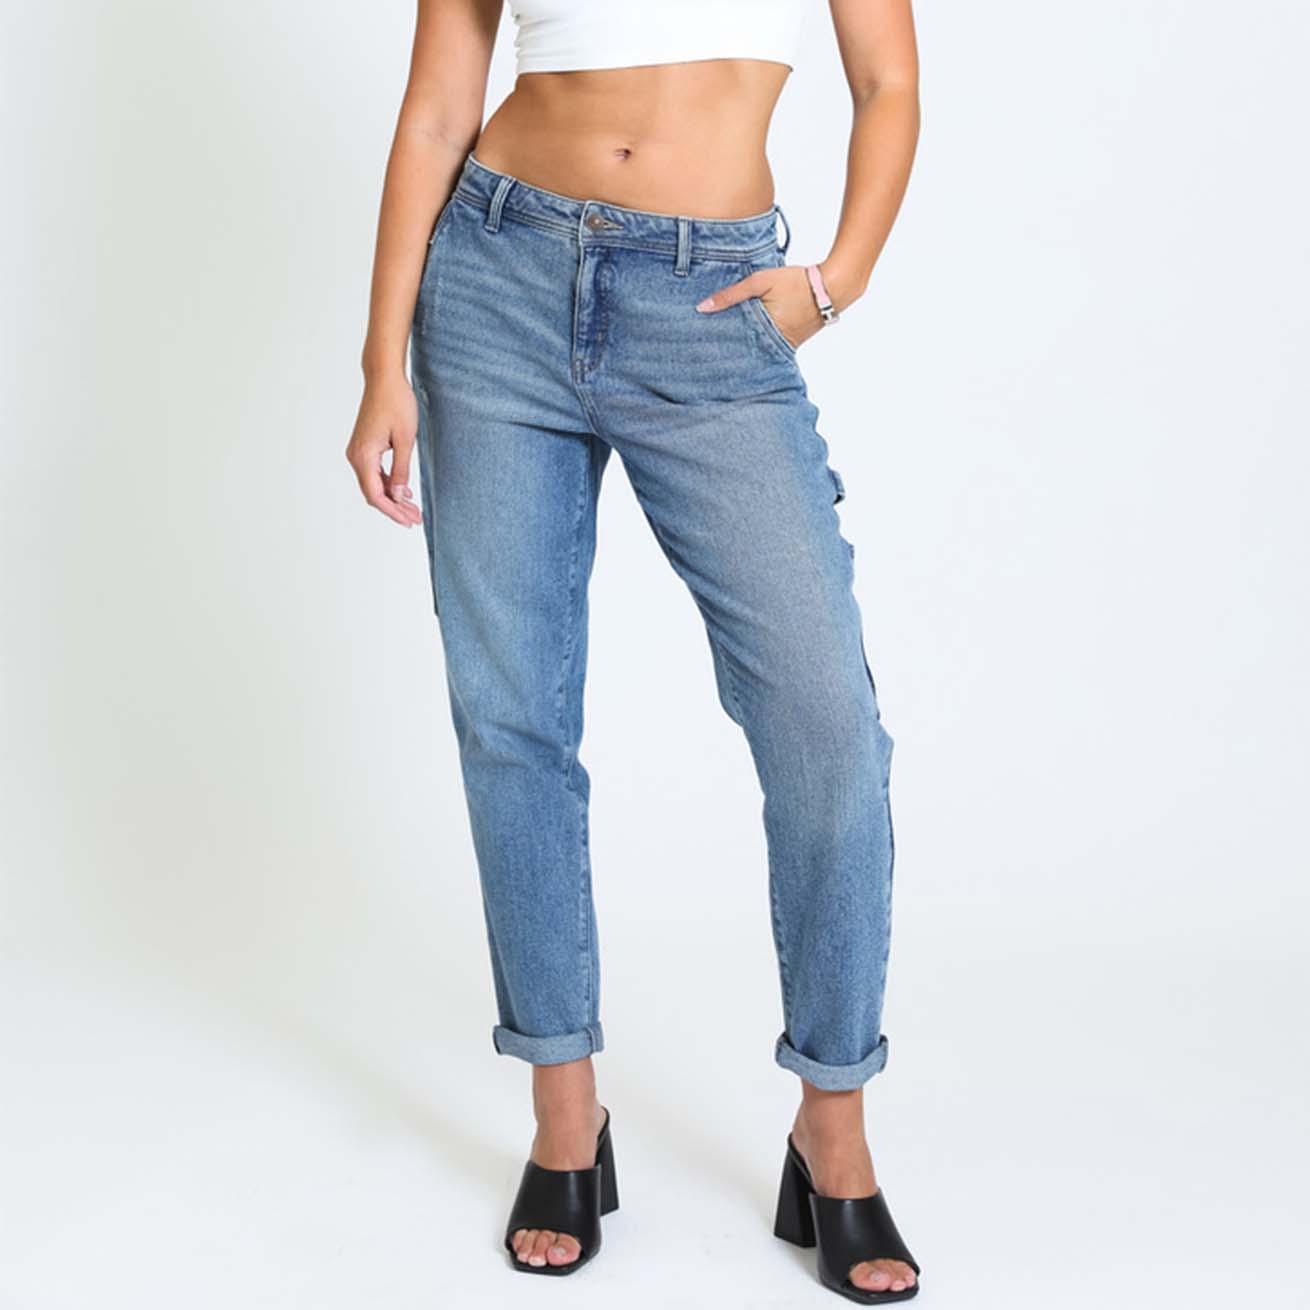 Be-girl brand Ladies stretch denim Capri jeans size 14 black denim wash  #NC-220